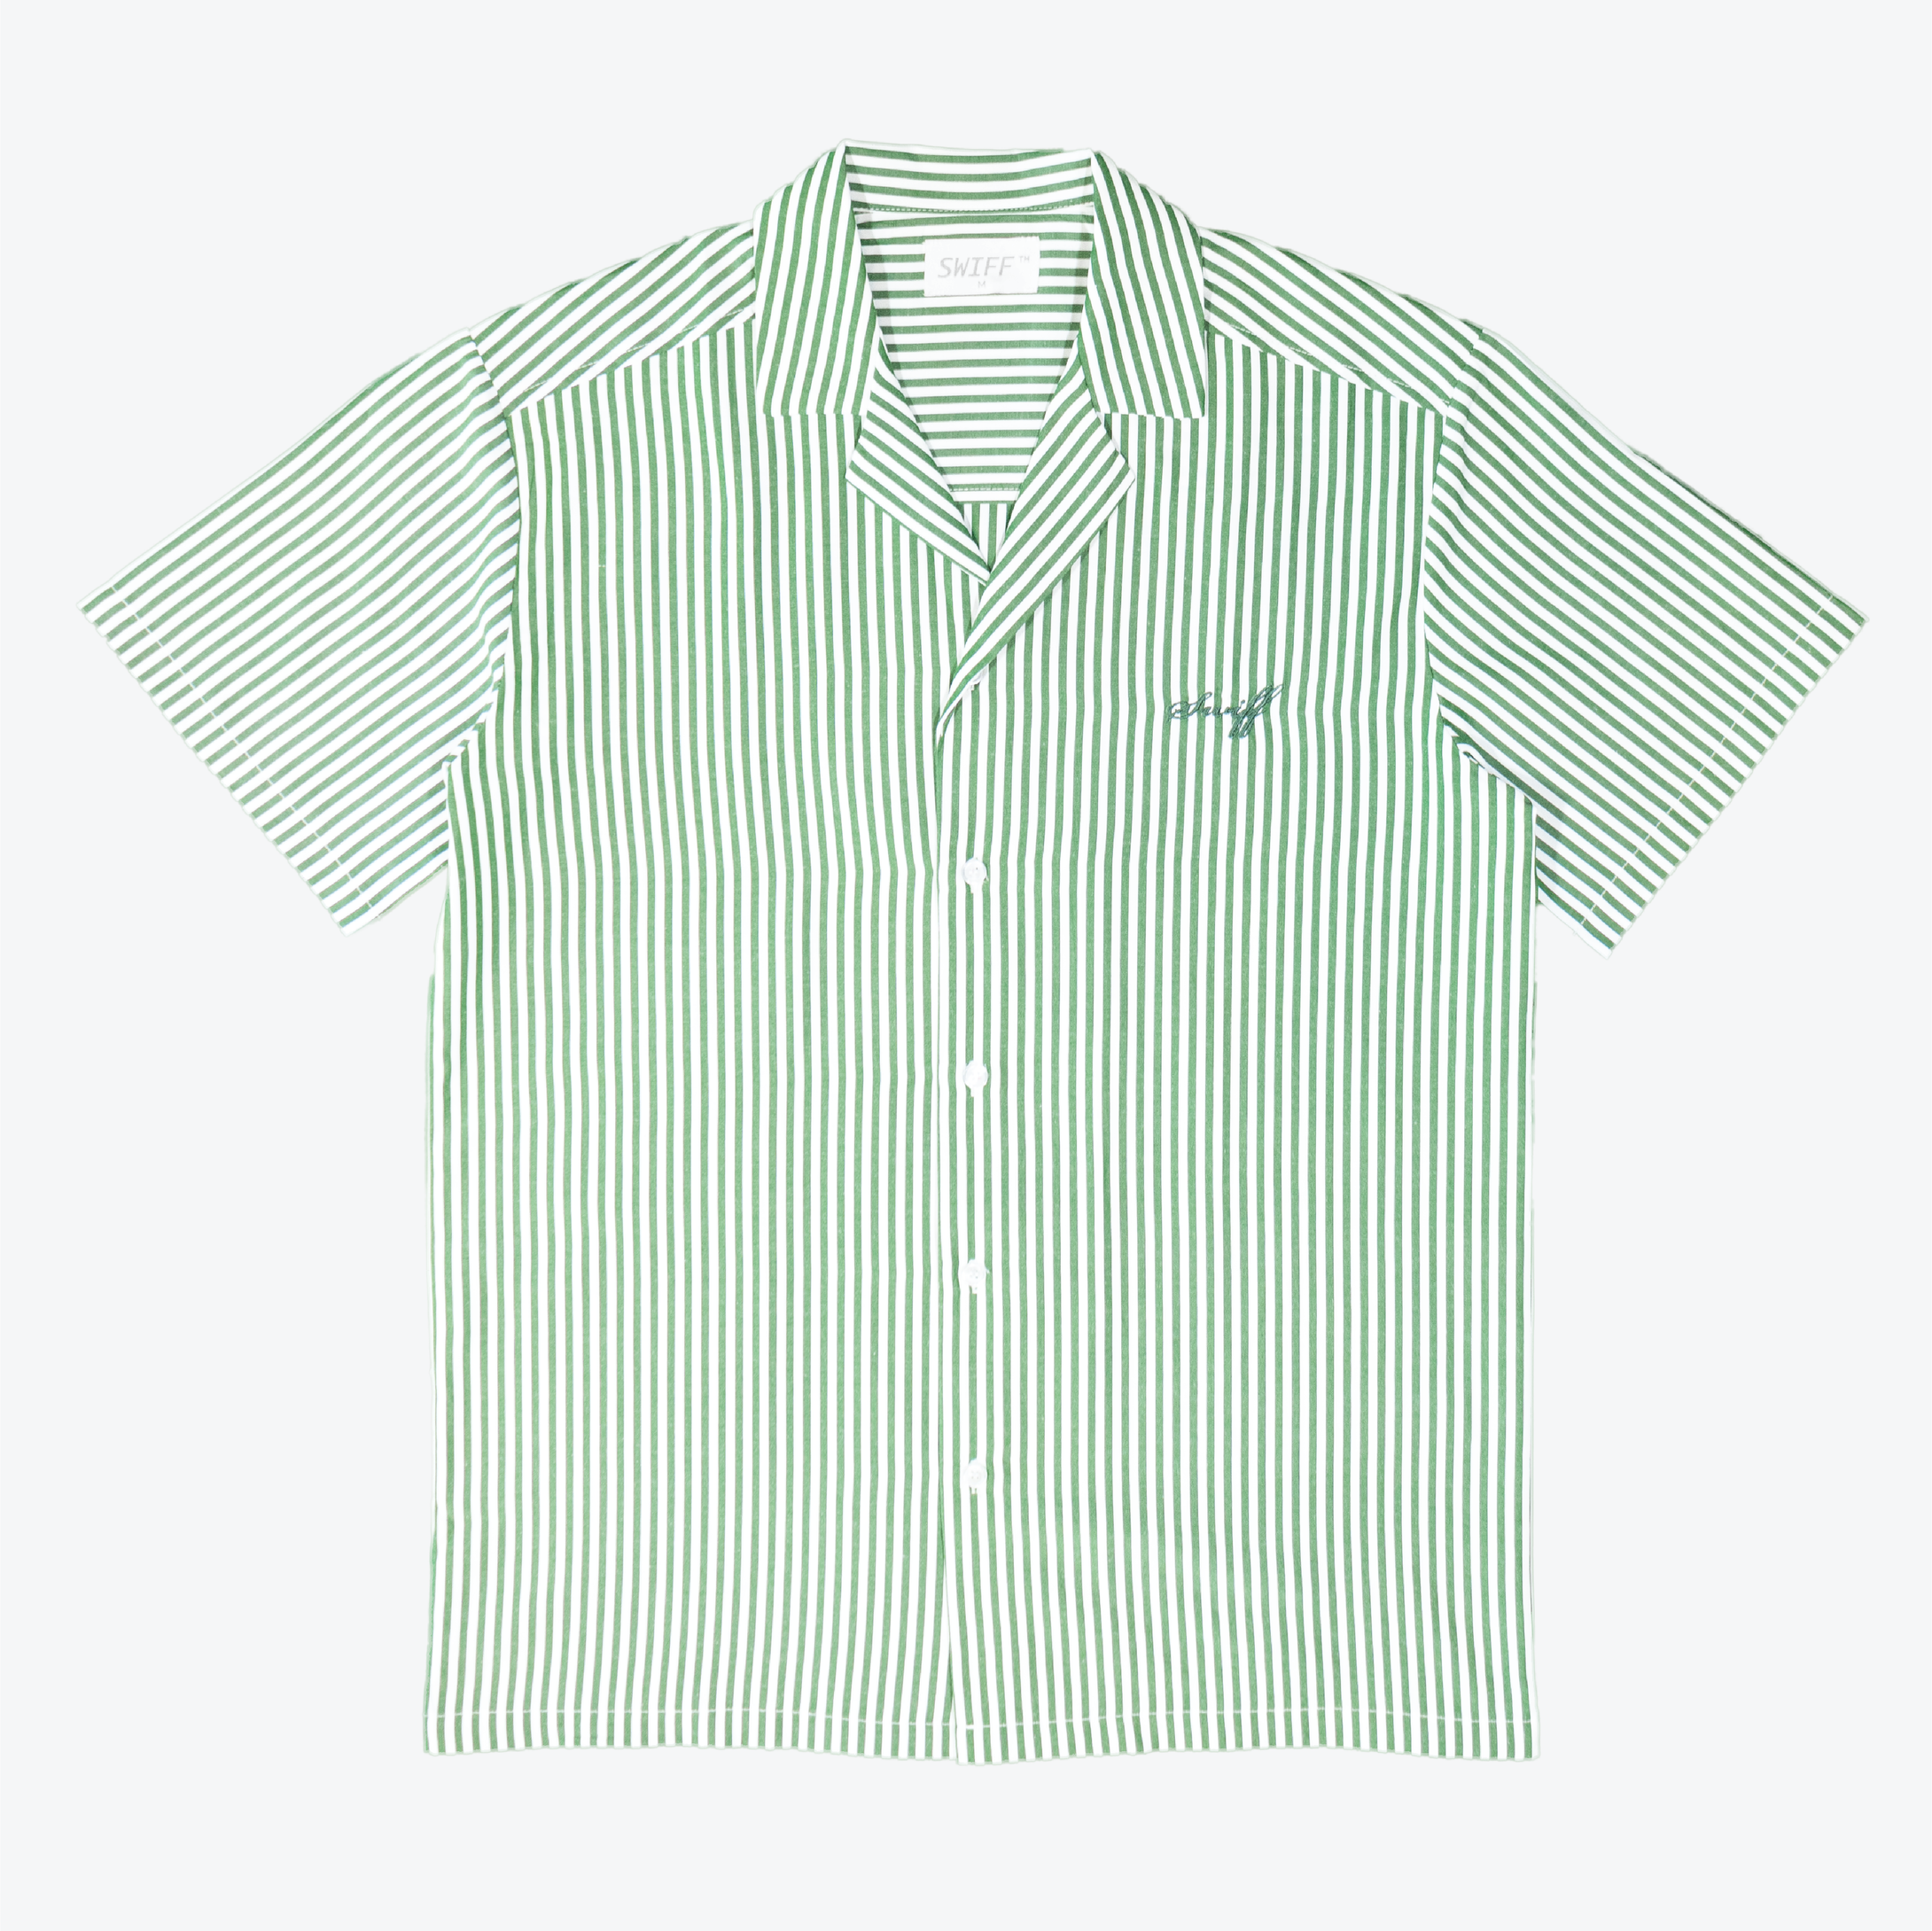 SWIFF Striped Leisure Shirt